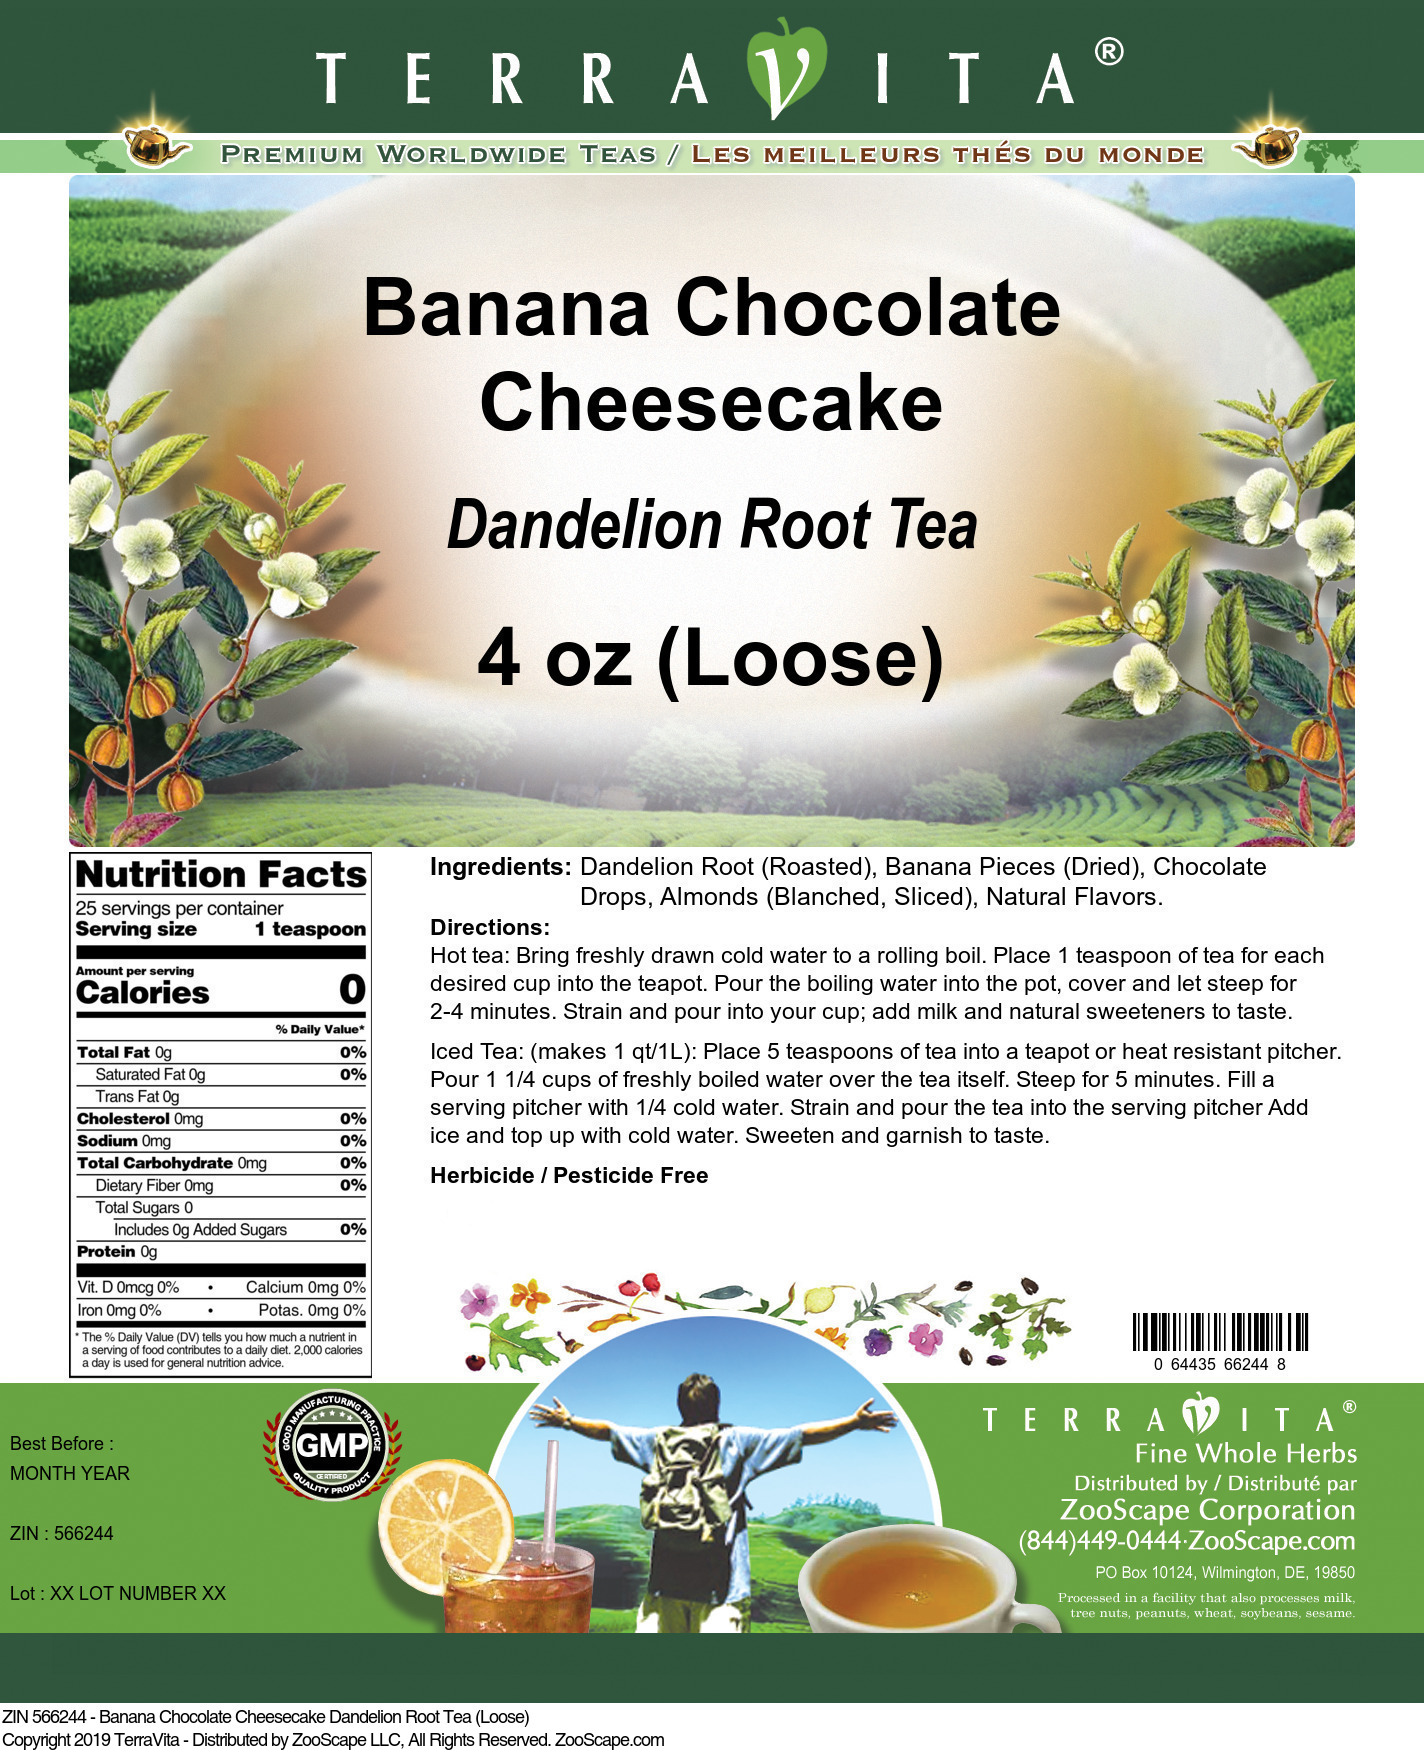 Banana Chocolate Cheesecake Dandelion Root Tea (Loose) - Label